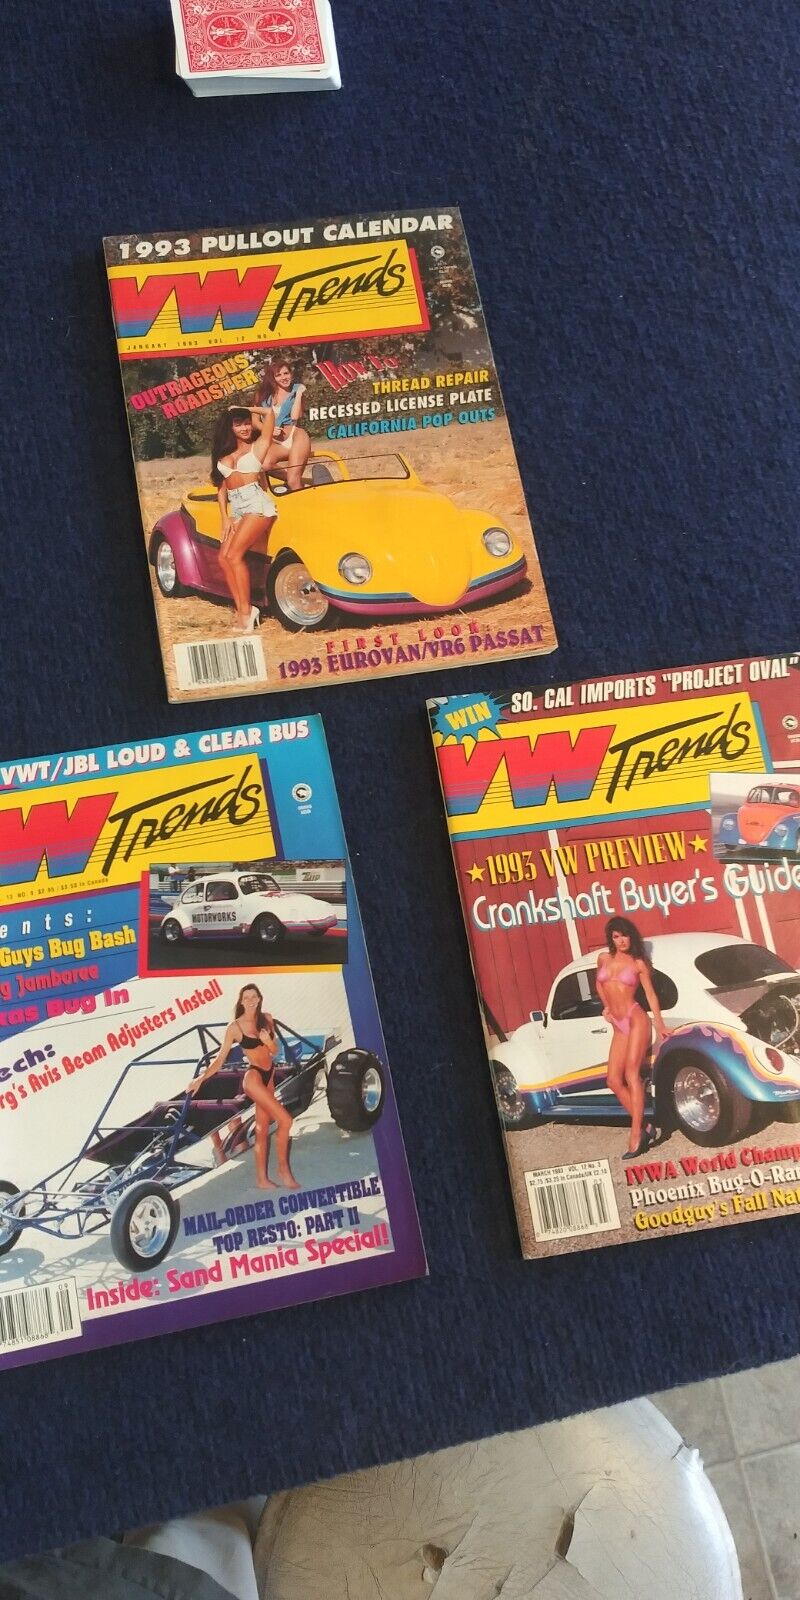 3 Vintage VW TRENDS Magazines